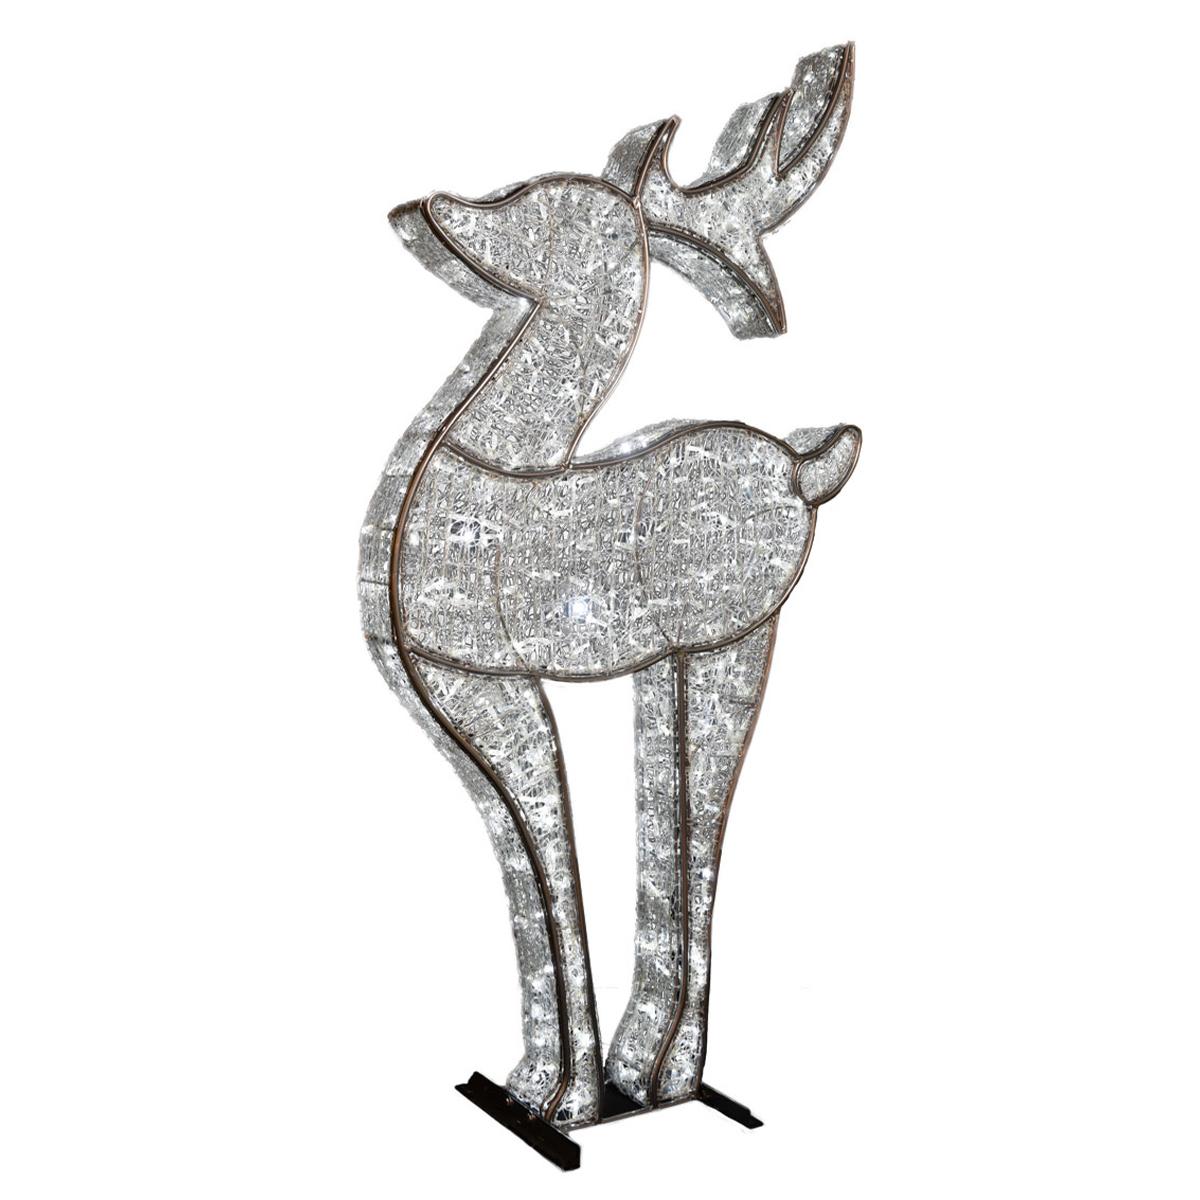 3D Christmas Deer Display - Cool White LED-lit - Medium - Silver - 7ft tall